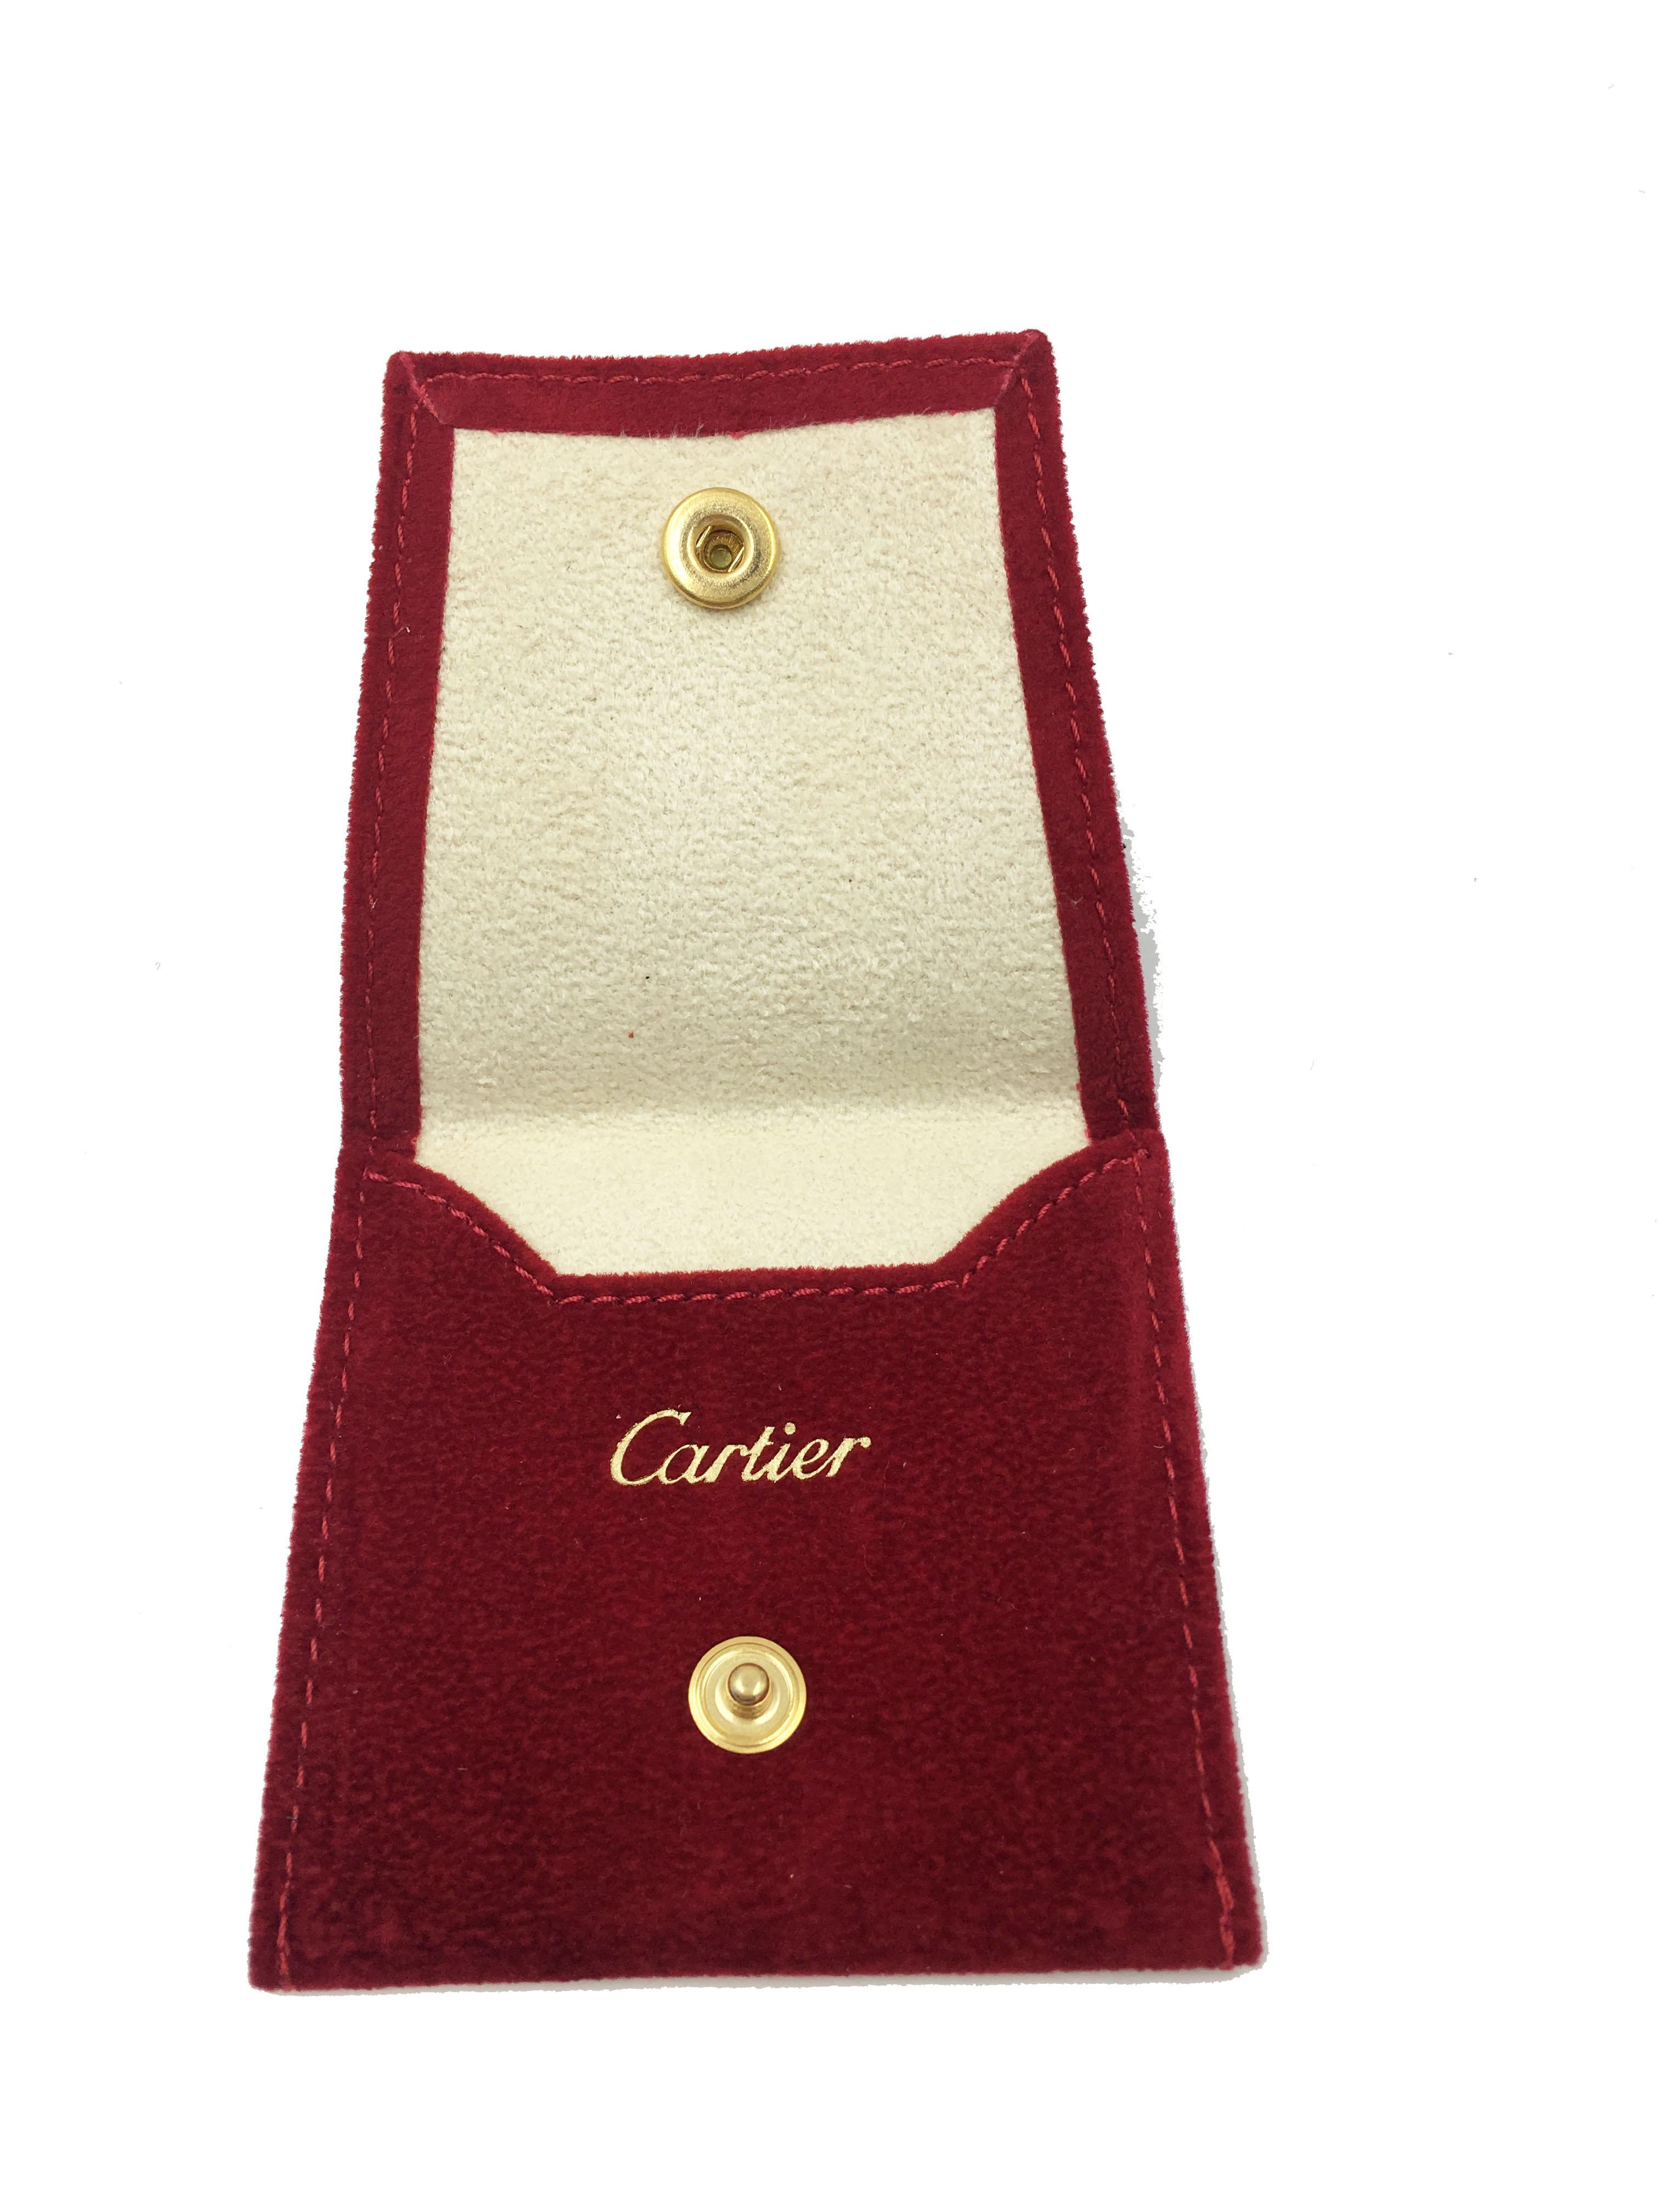 Cartier Panthère De Yellow Gold Tsavorite Garnets Onyx Necklace For Sale 1